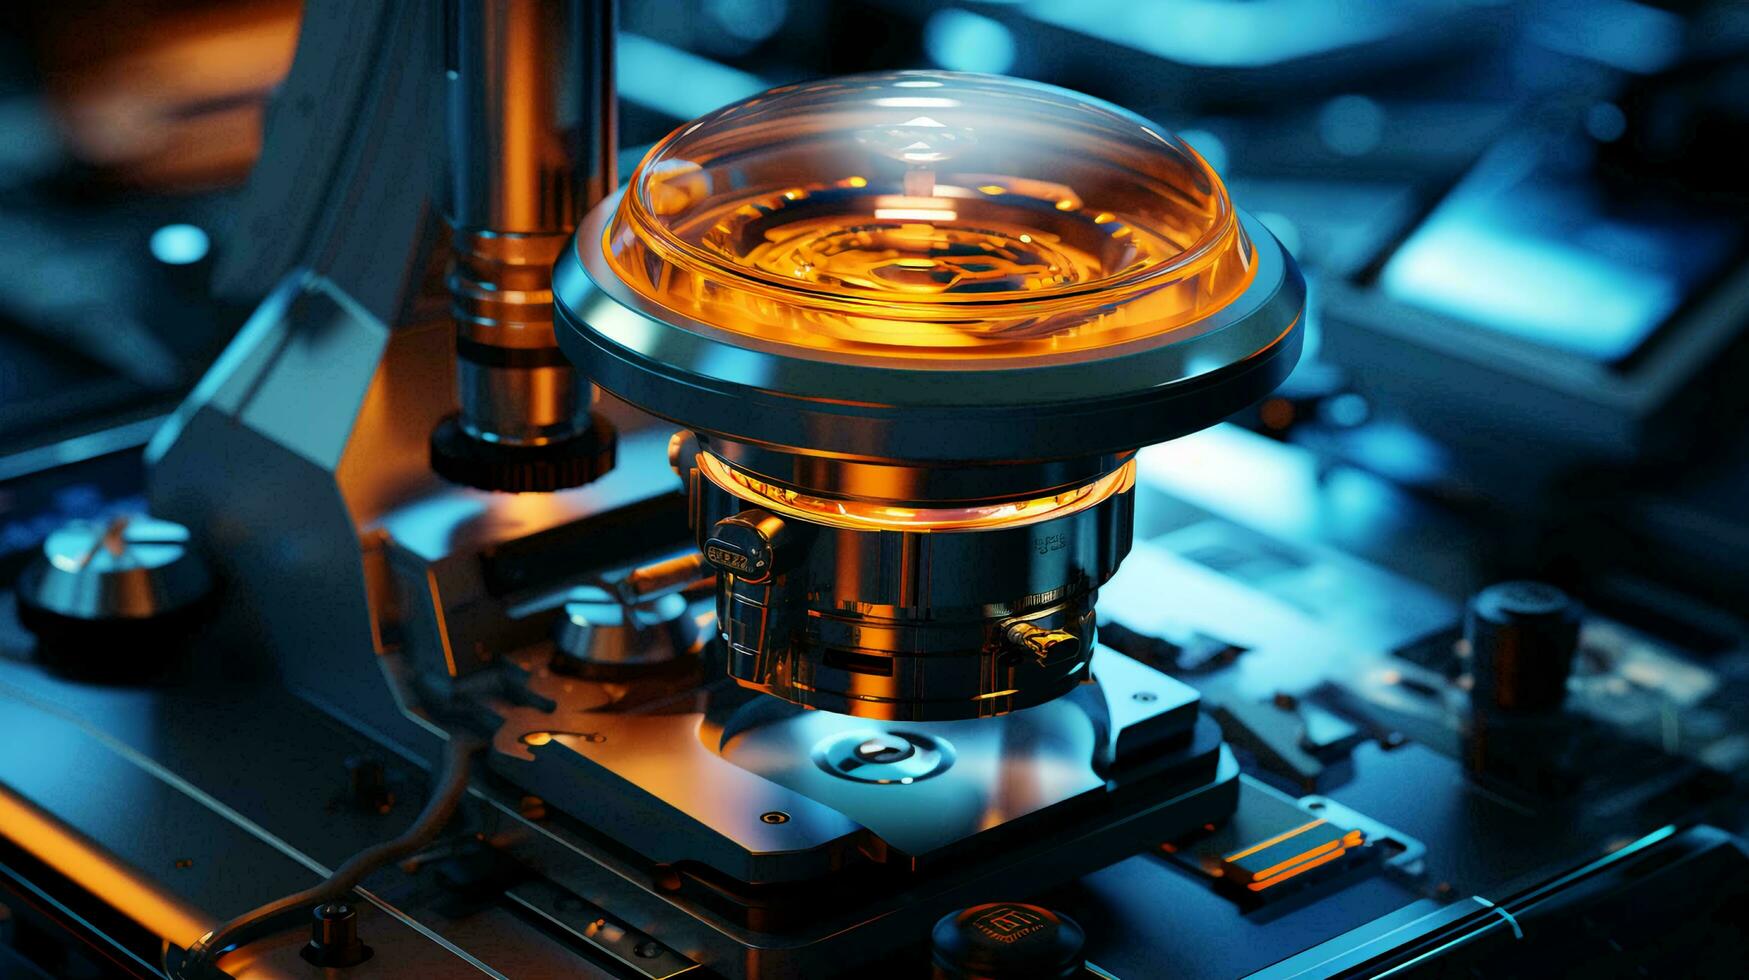 High tech futuristic digital microscope in scientific or medical laboratory for research photo